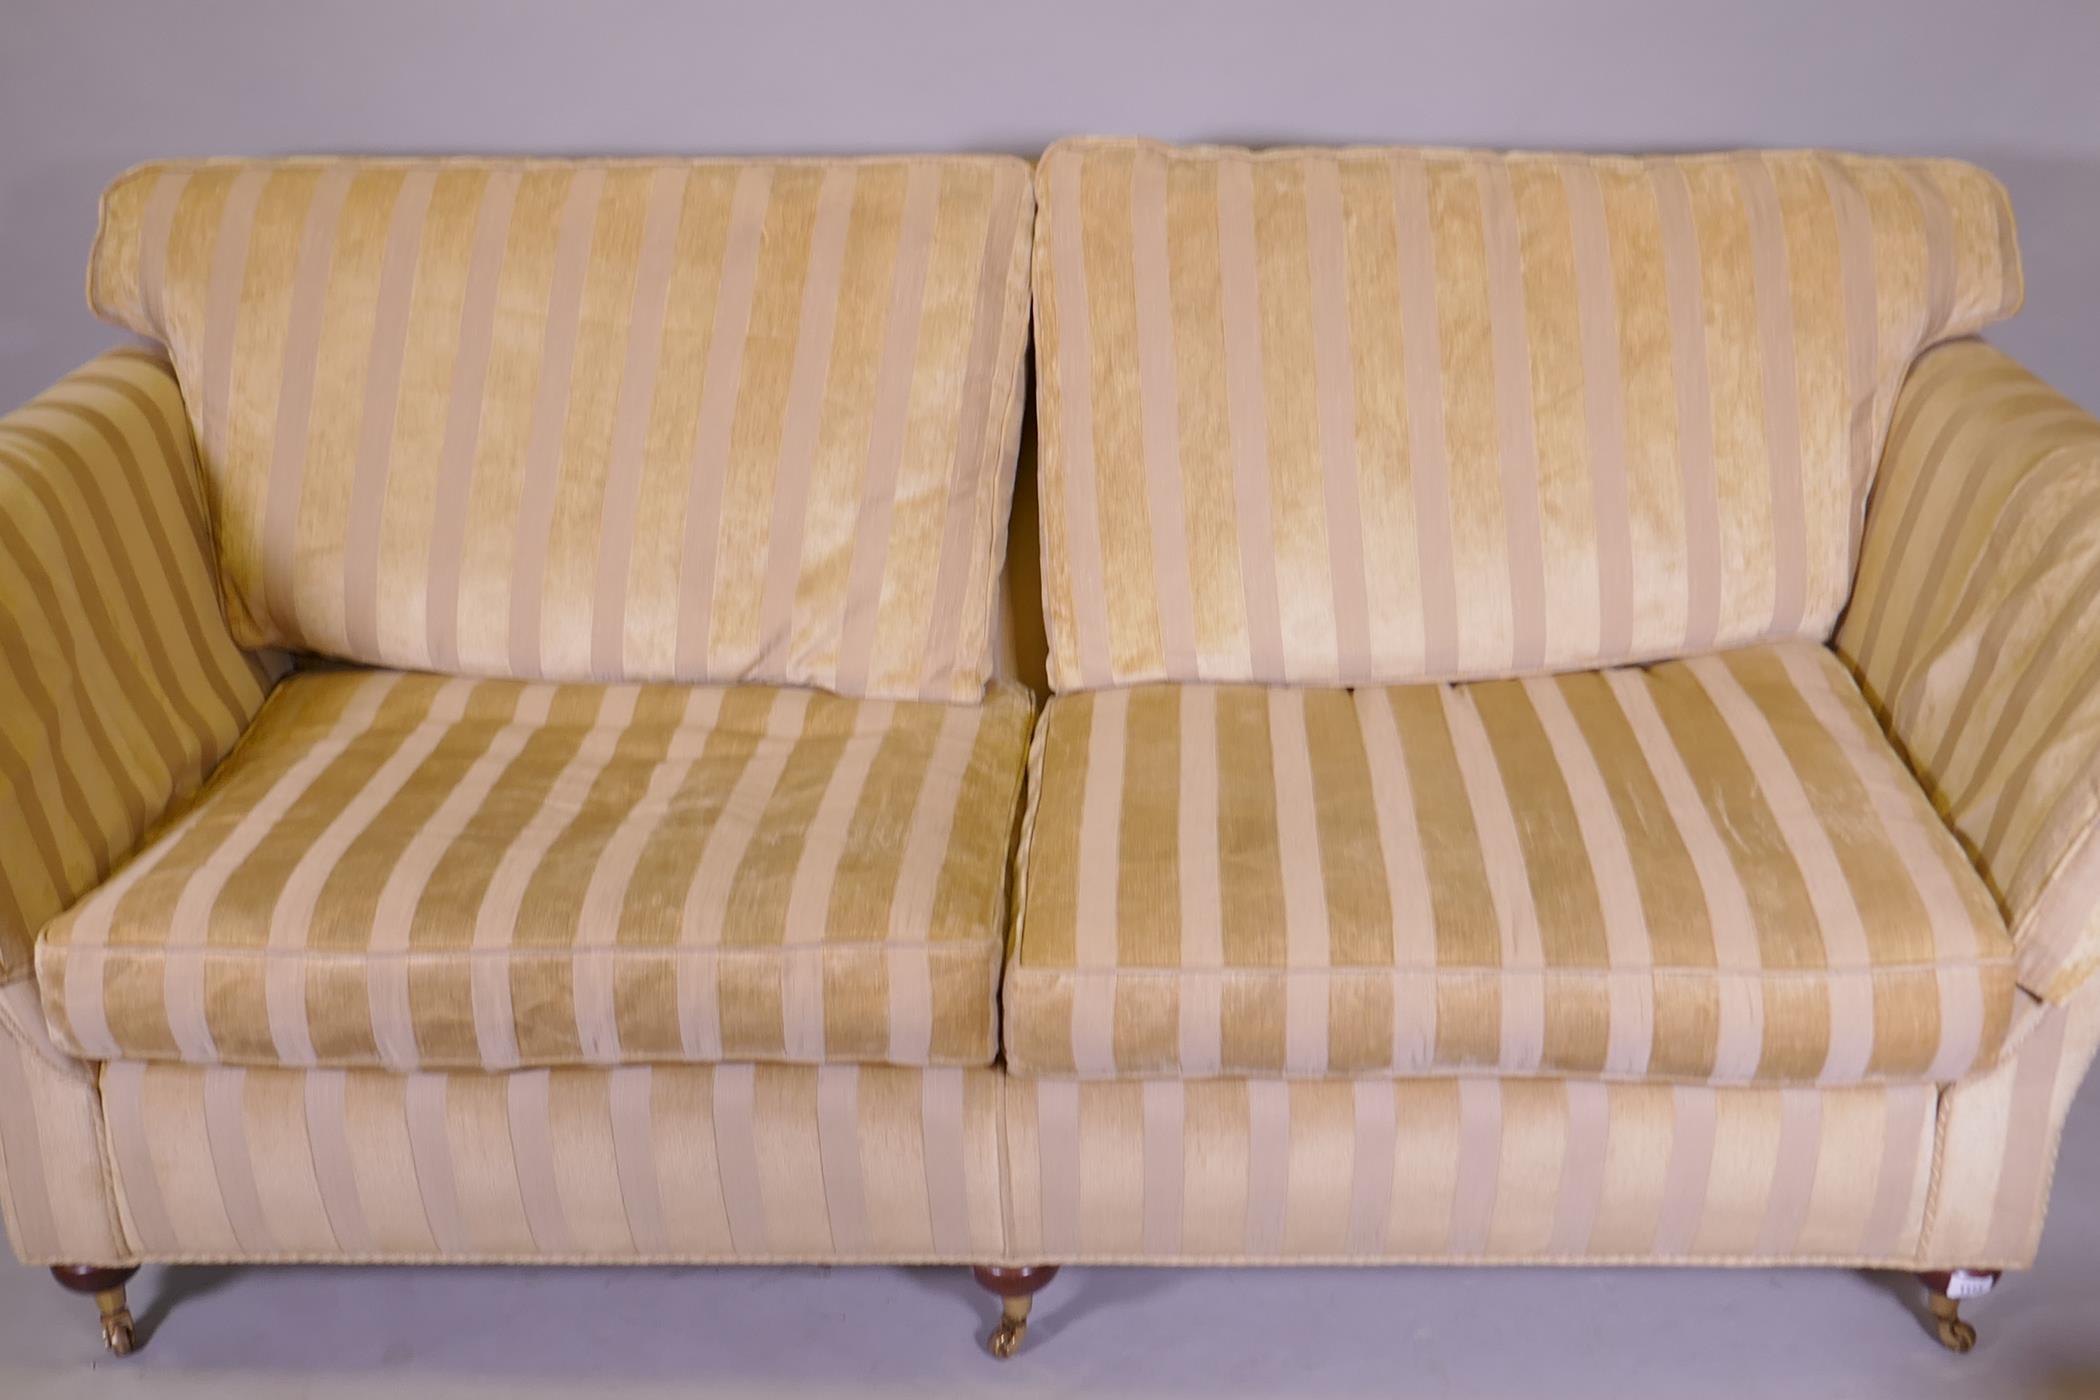 A Duresta sofa, 210cm wide